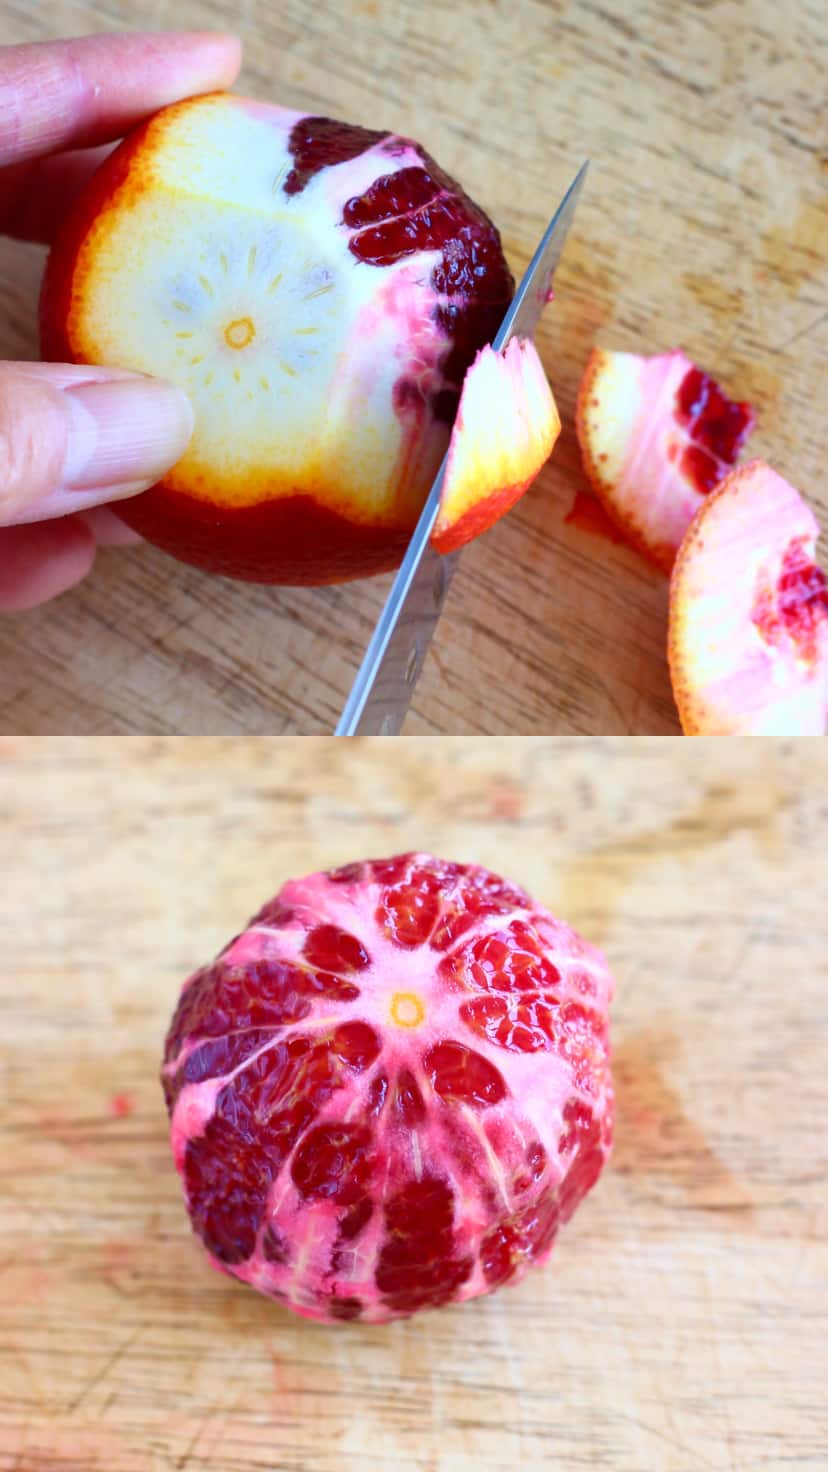 Peeling the skin off a blood orange using a knife, and a peeled blood orange